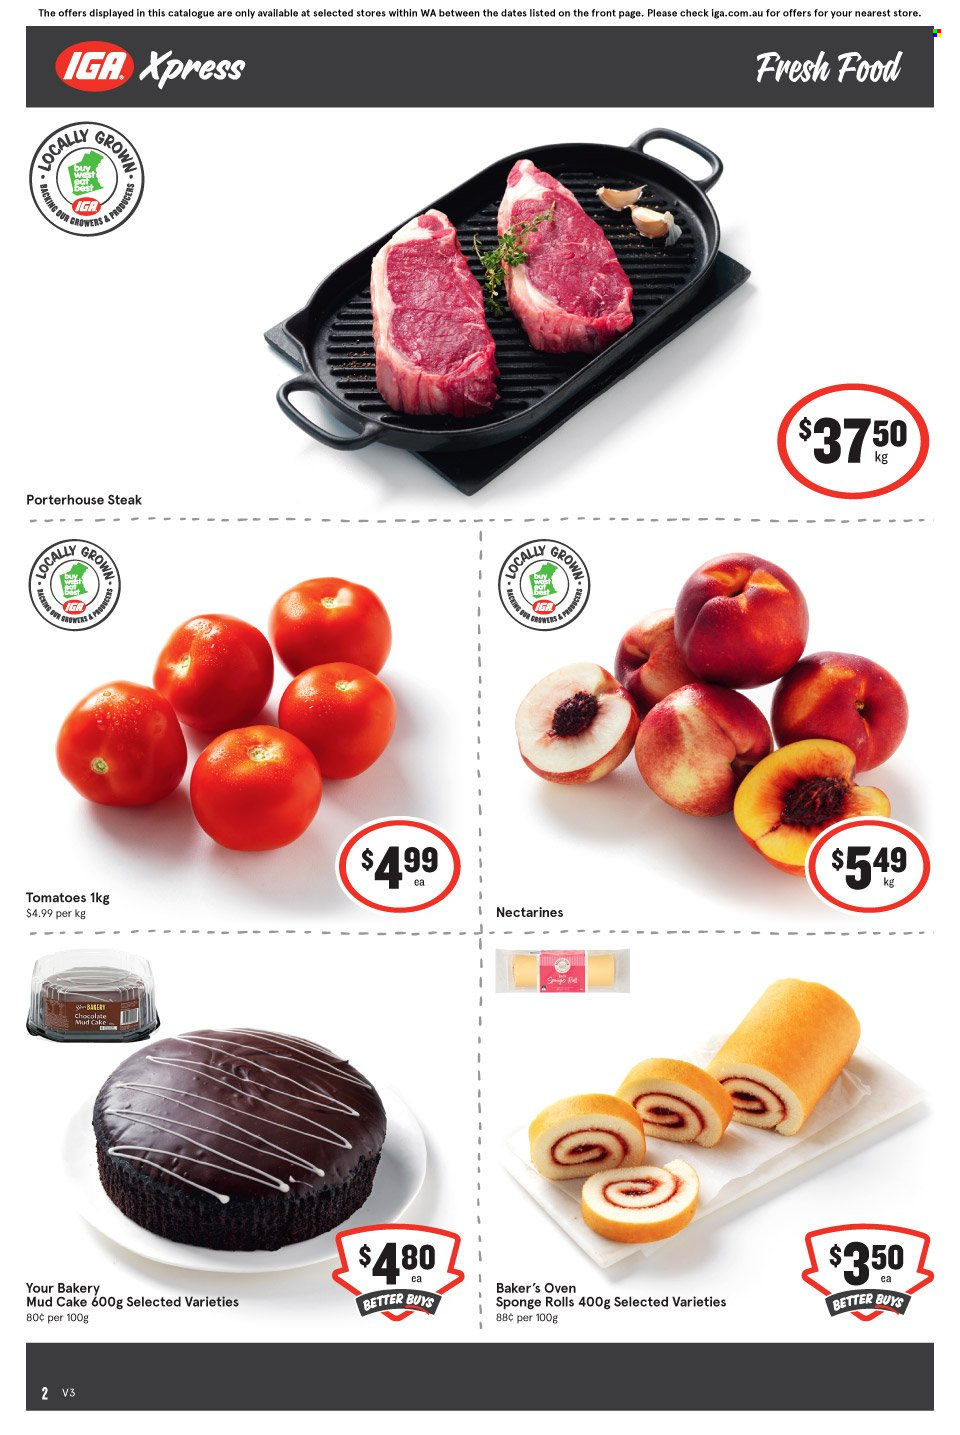 thumbnail - IGA Xpress Catalogue - 5 Jan 2022 - 11 Jan 2022 - Sales products - cake, tomatoes, nectarines, steak, sponge. Page 2.